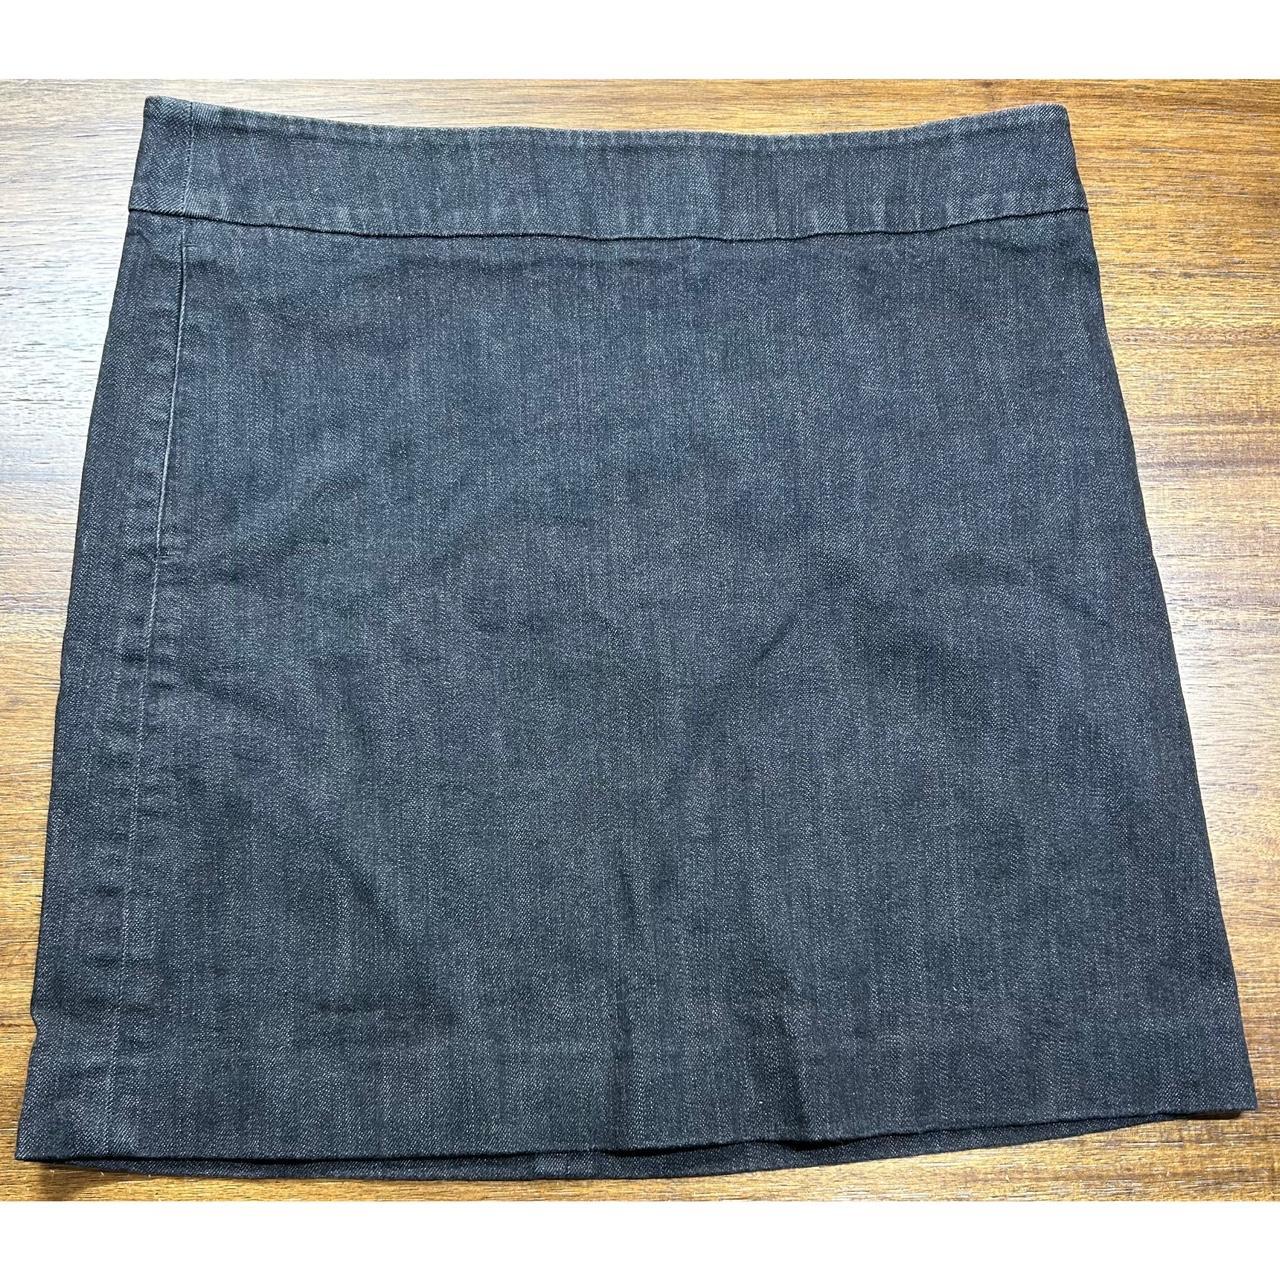 DKNYC Size 8 Black Short Jean Skirt - This